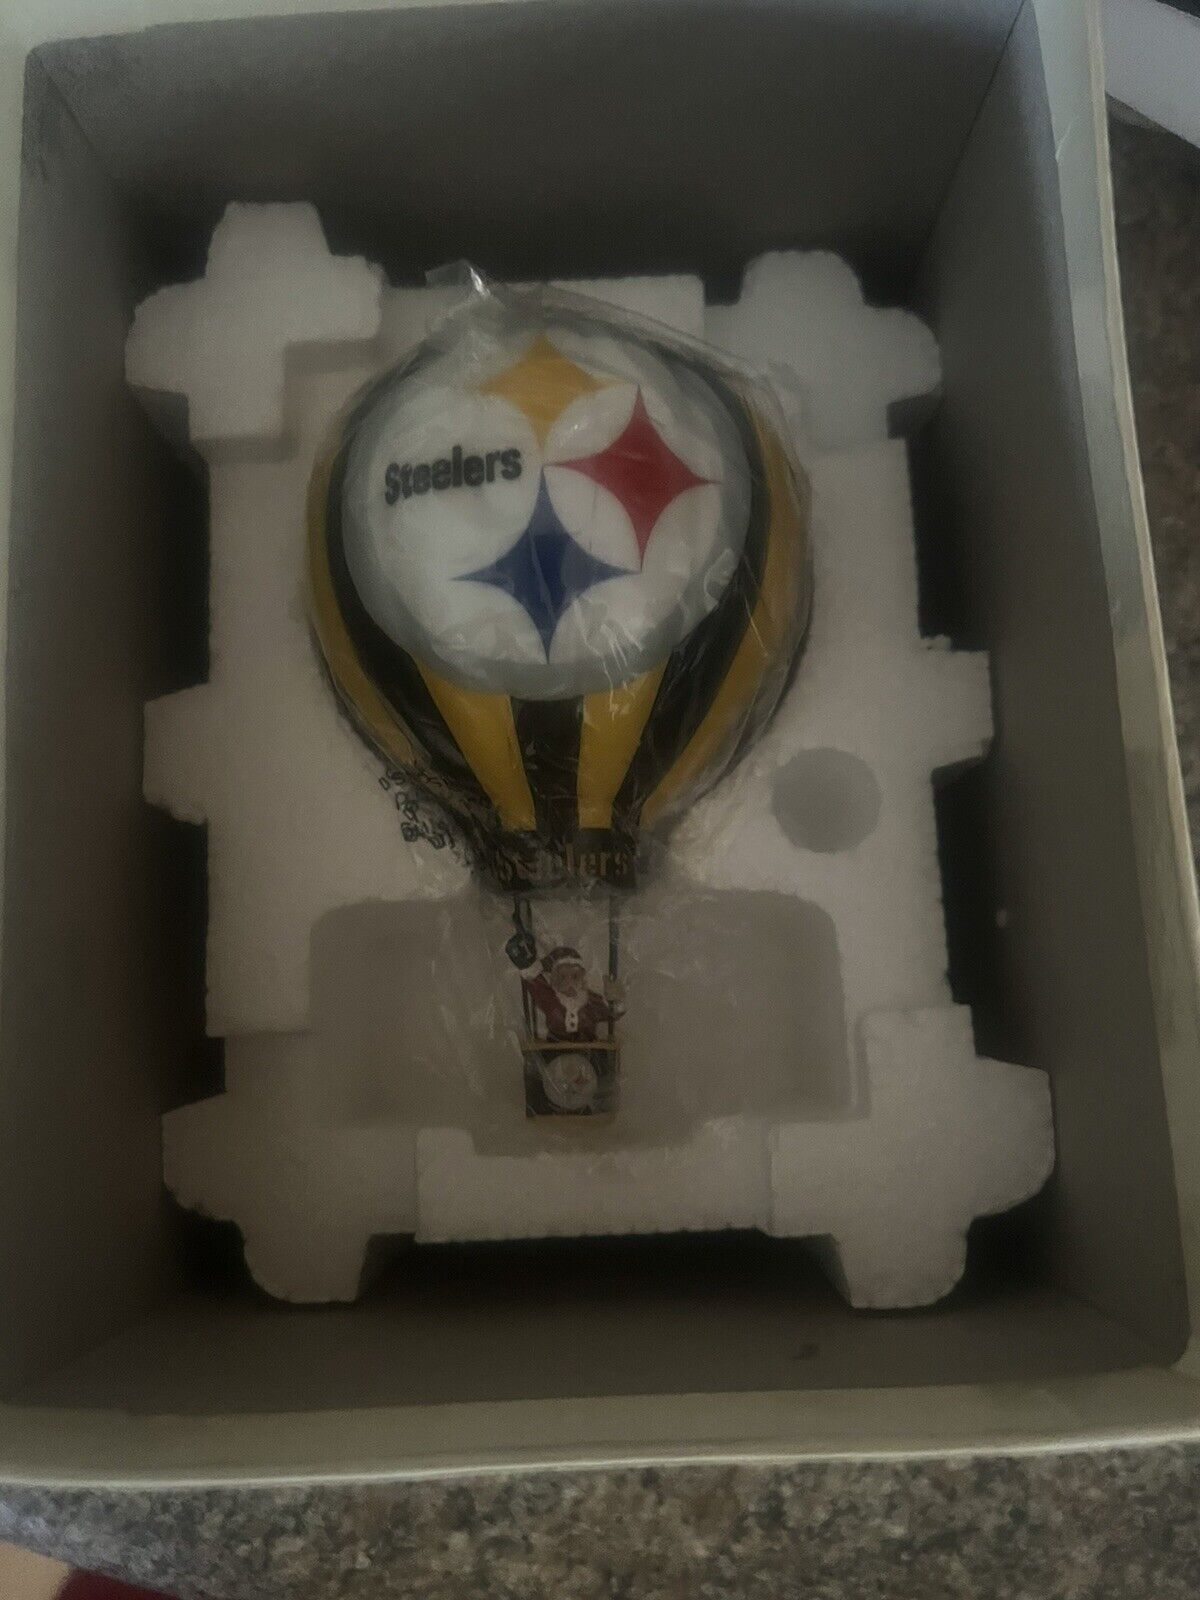 2003 Danbury Mint Pittsburgh Steelers Hot Air Balloon Ornament New In Box